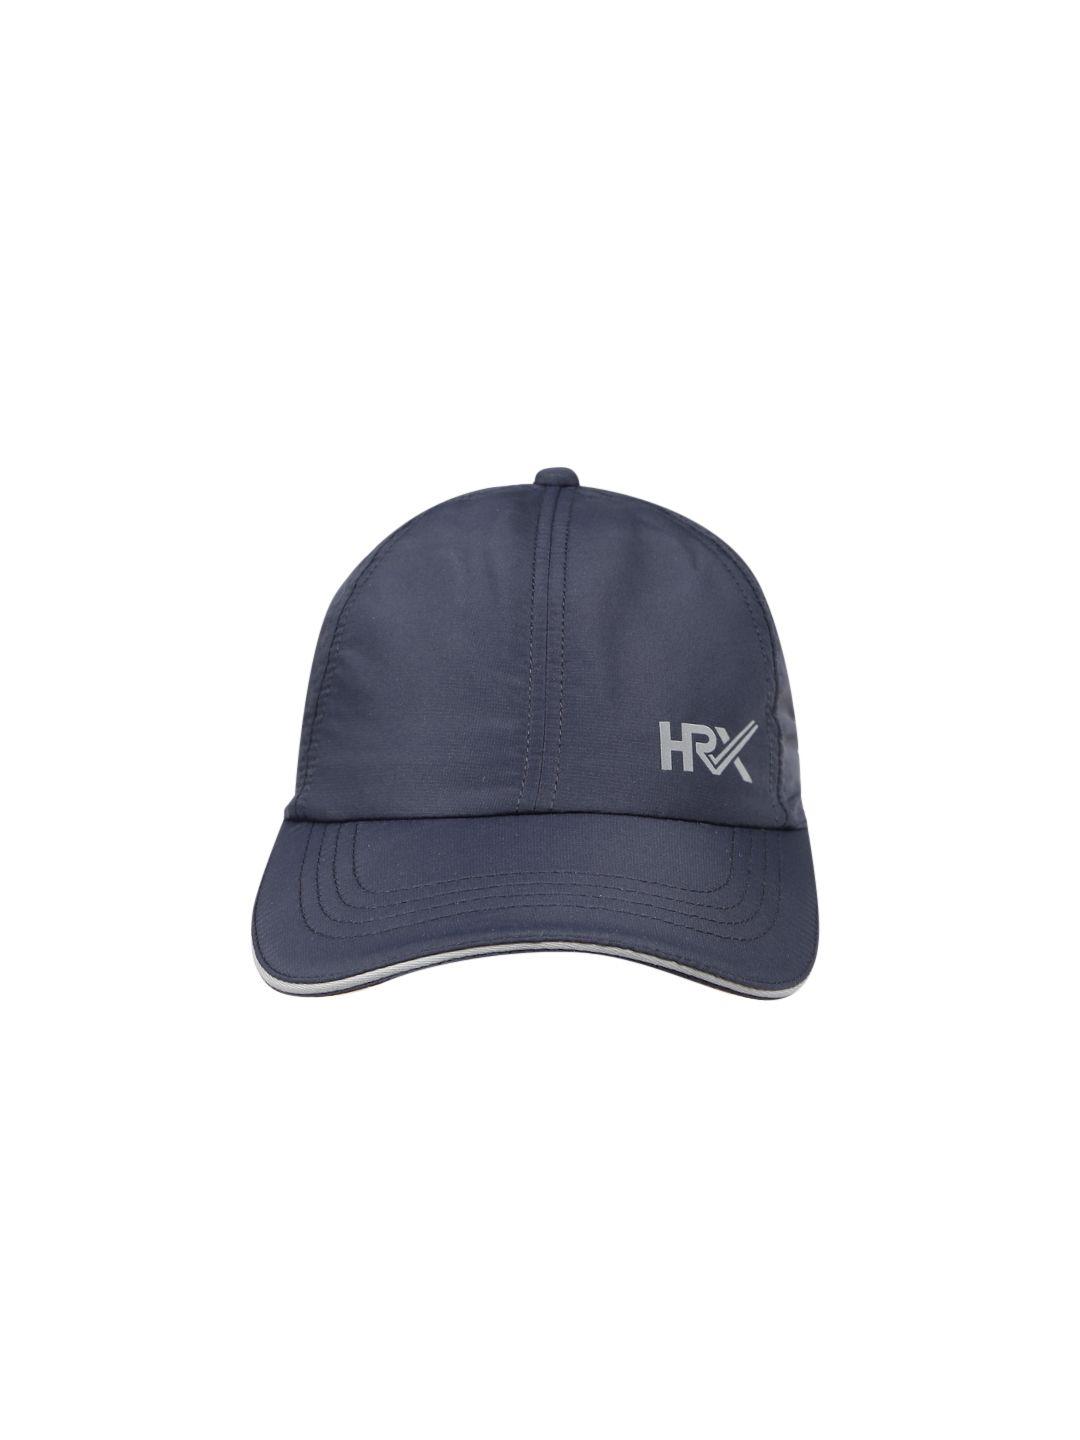 hrx by hrithik roshan men navy blue solid lifestyle cap